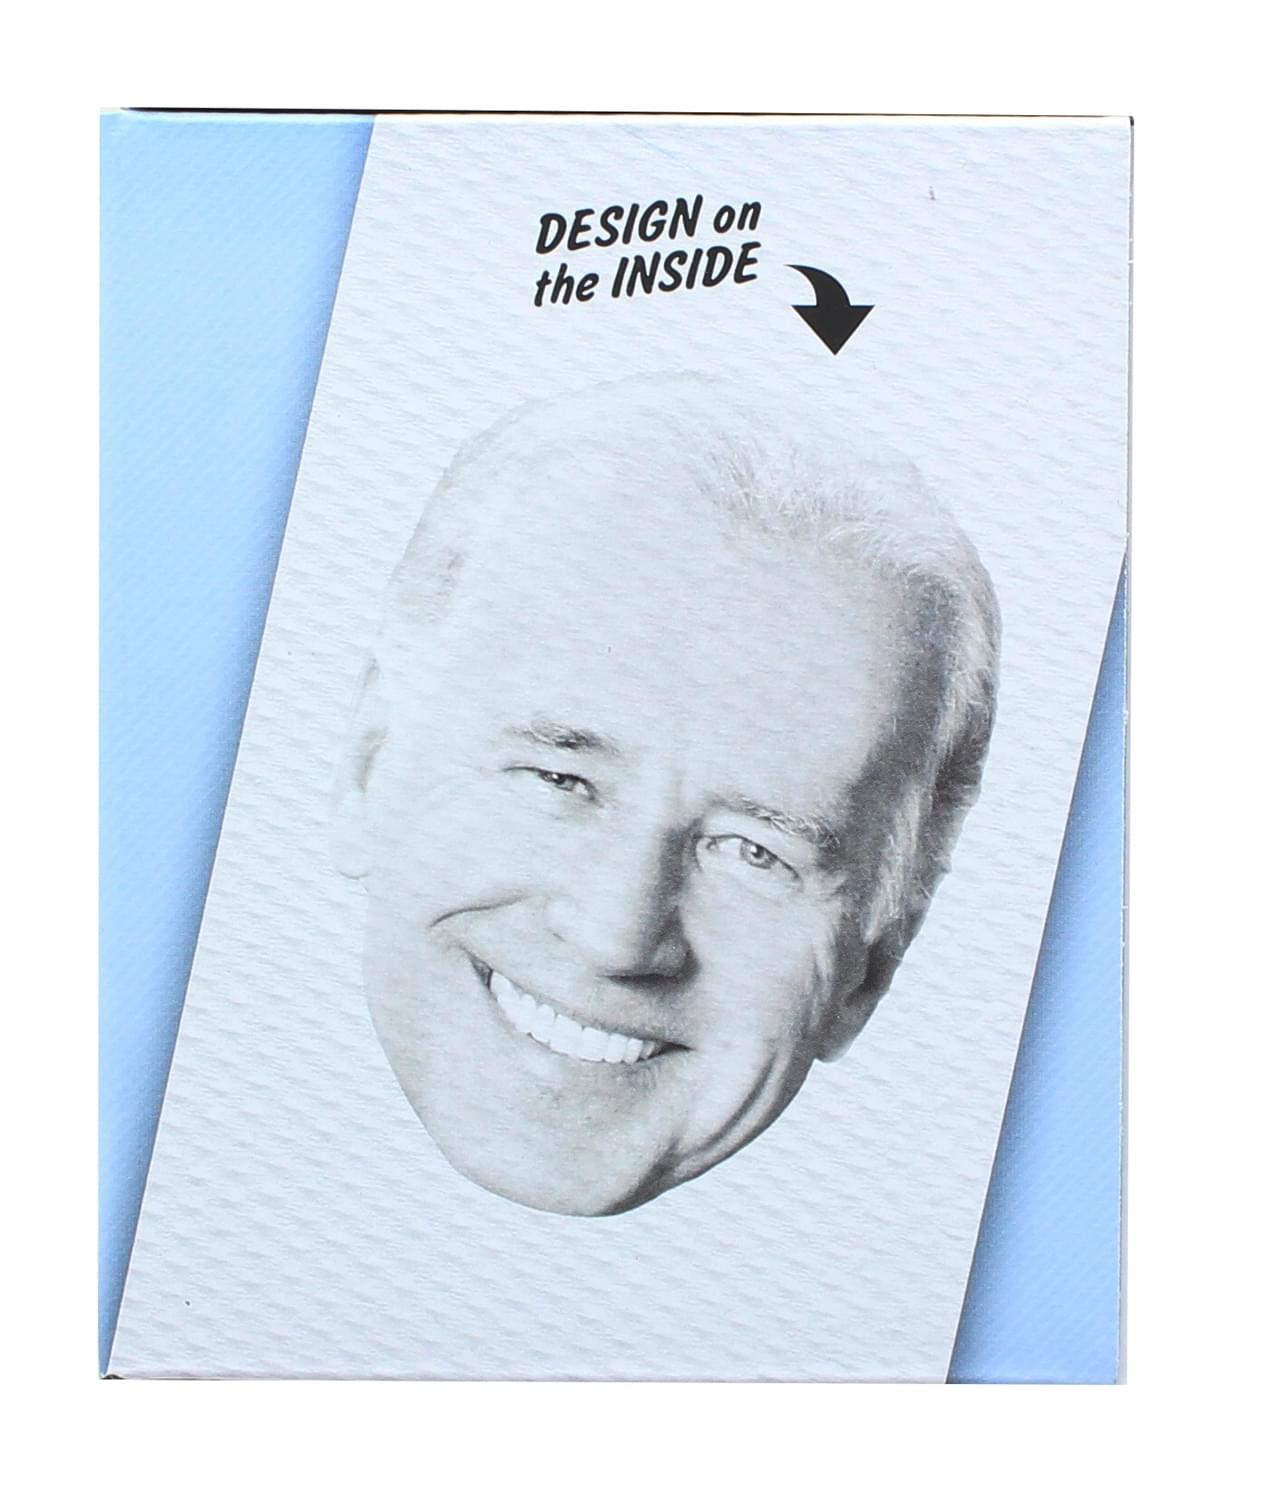 Home Supplies Joe Biden Printed Rolling Paper Funny Toilet Paper